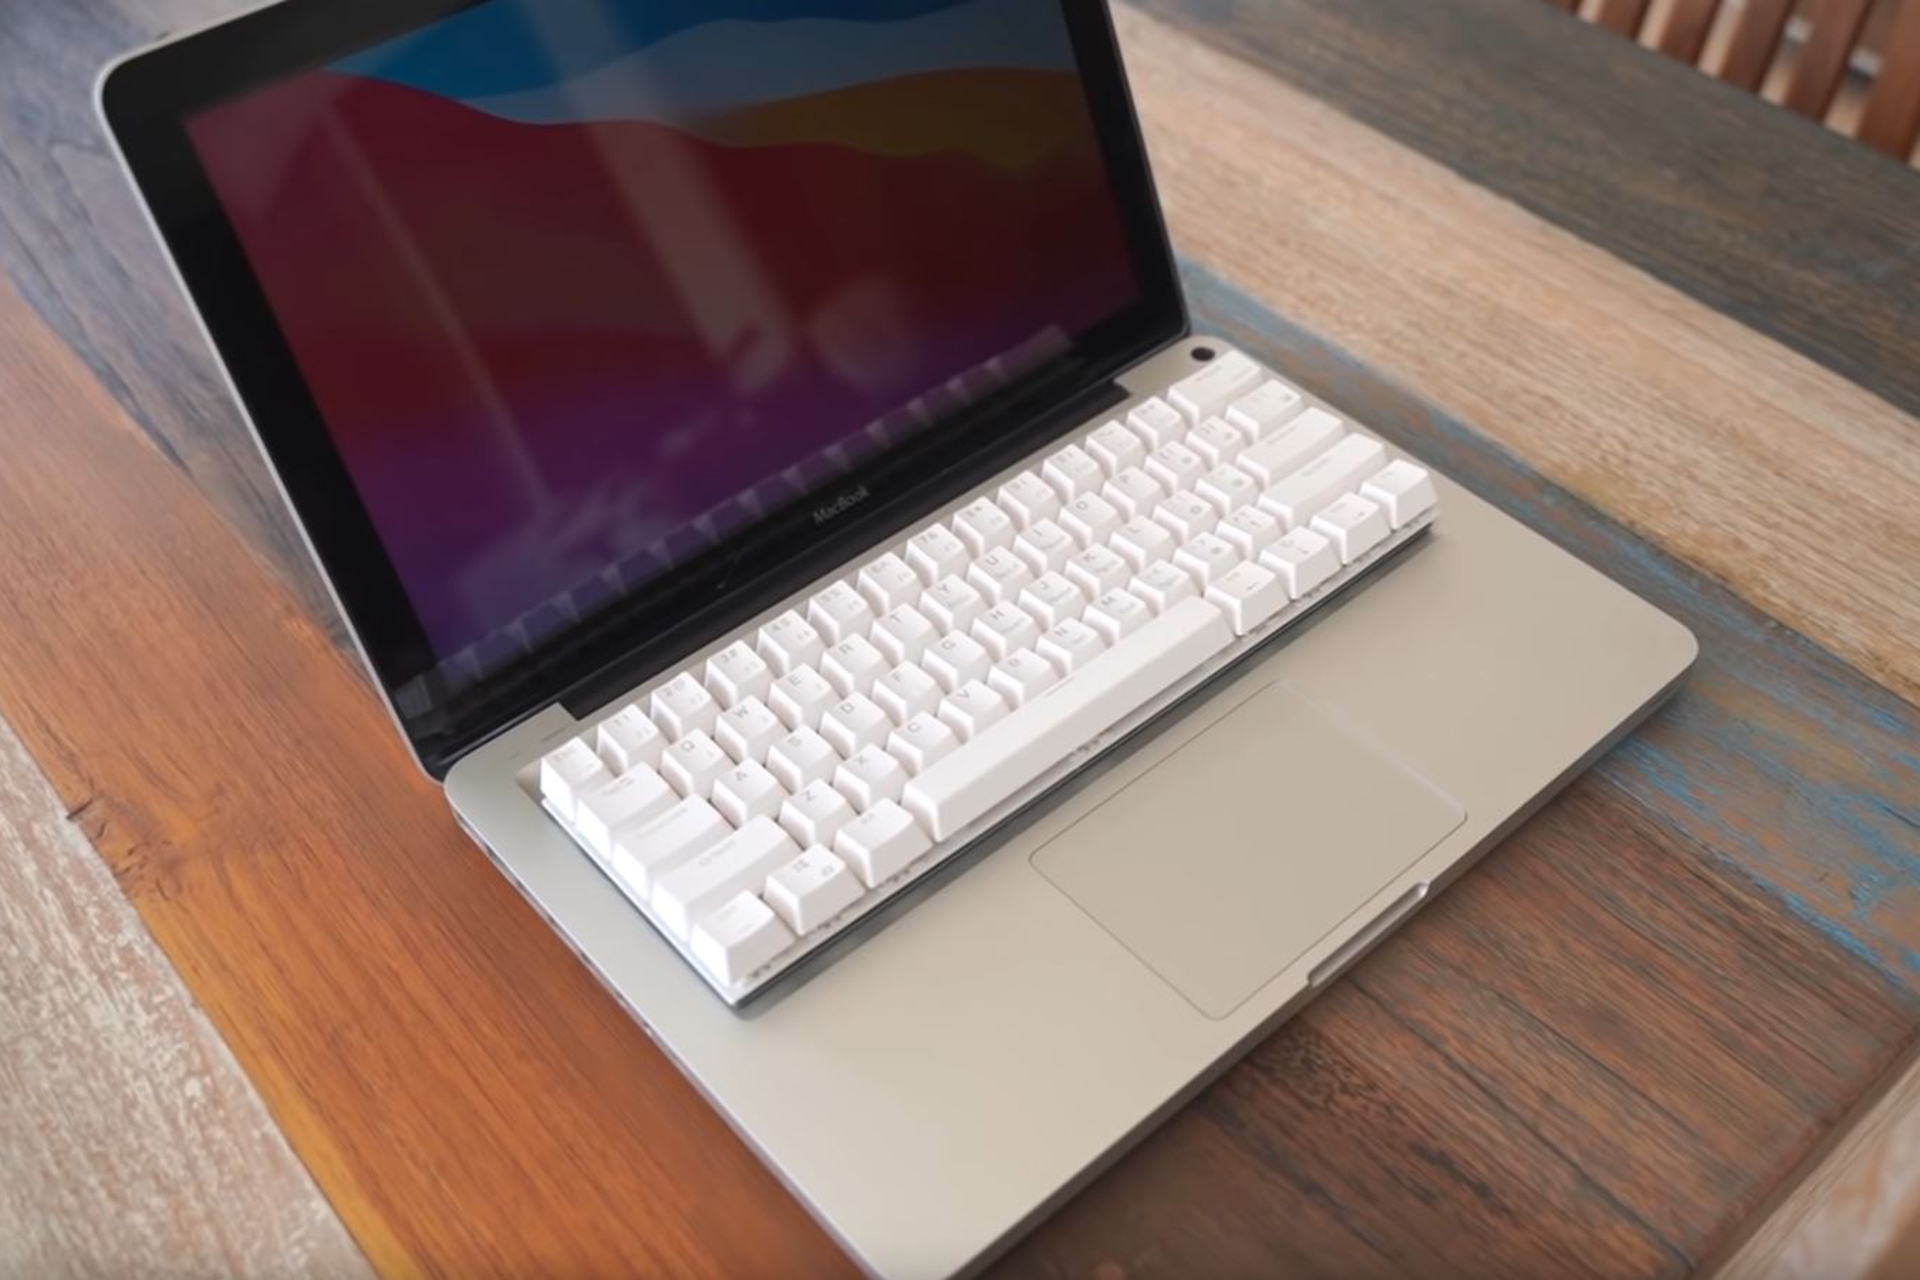 Mechanische Tastatur macht MacBook zum MechBook